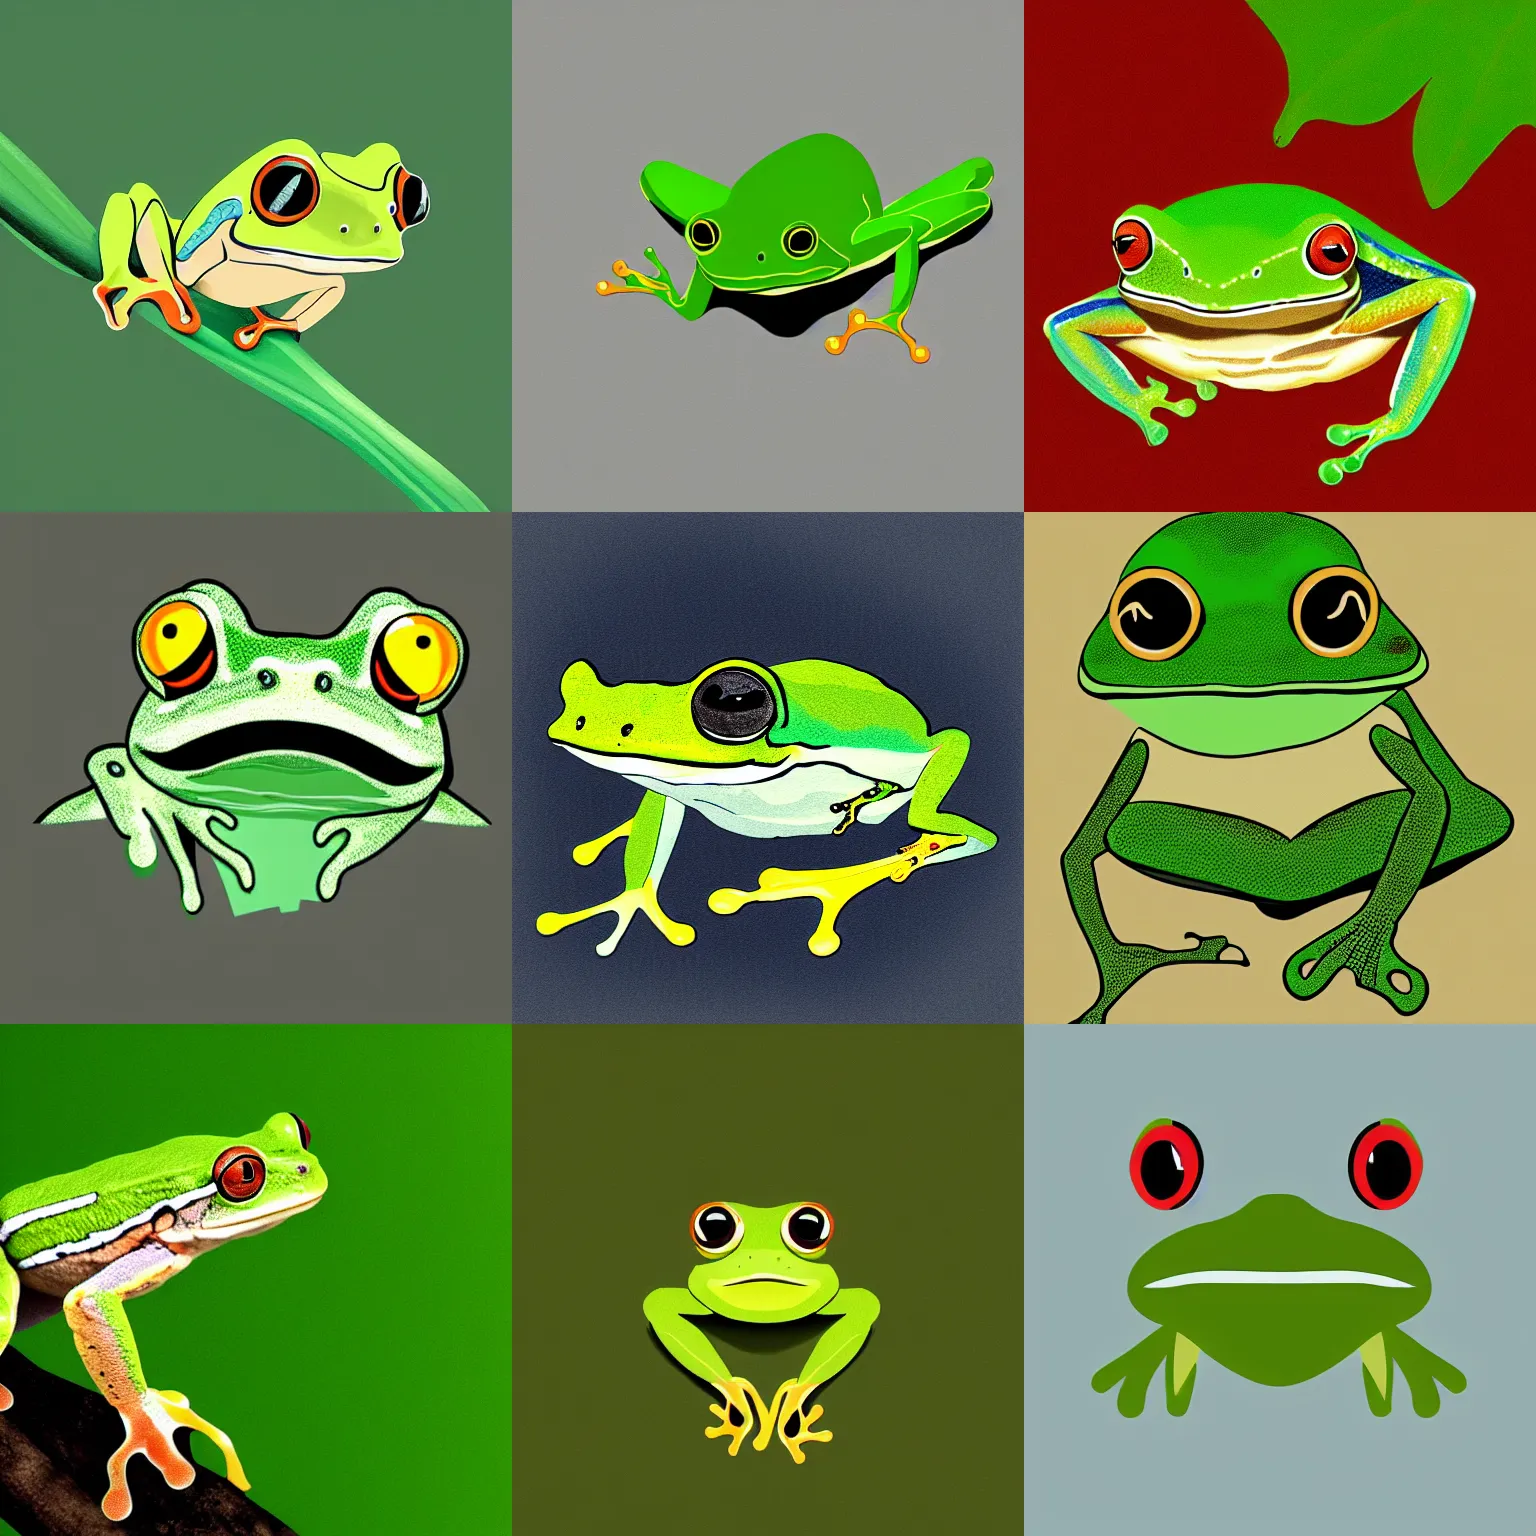 Prompt: Amazon tree frog, minimalist illustration